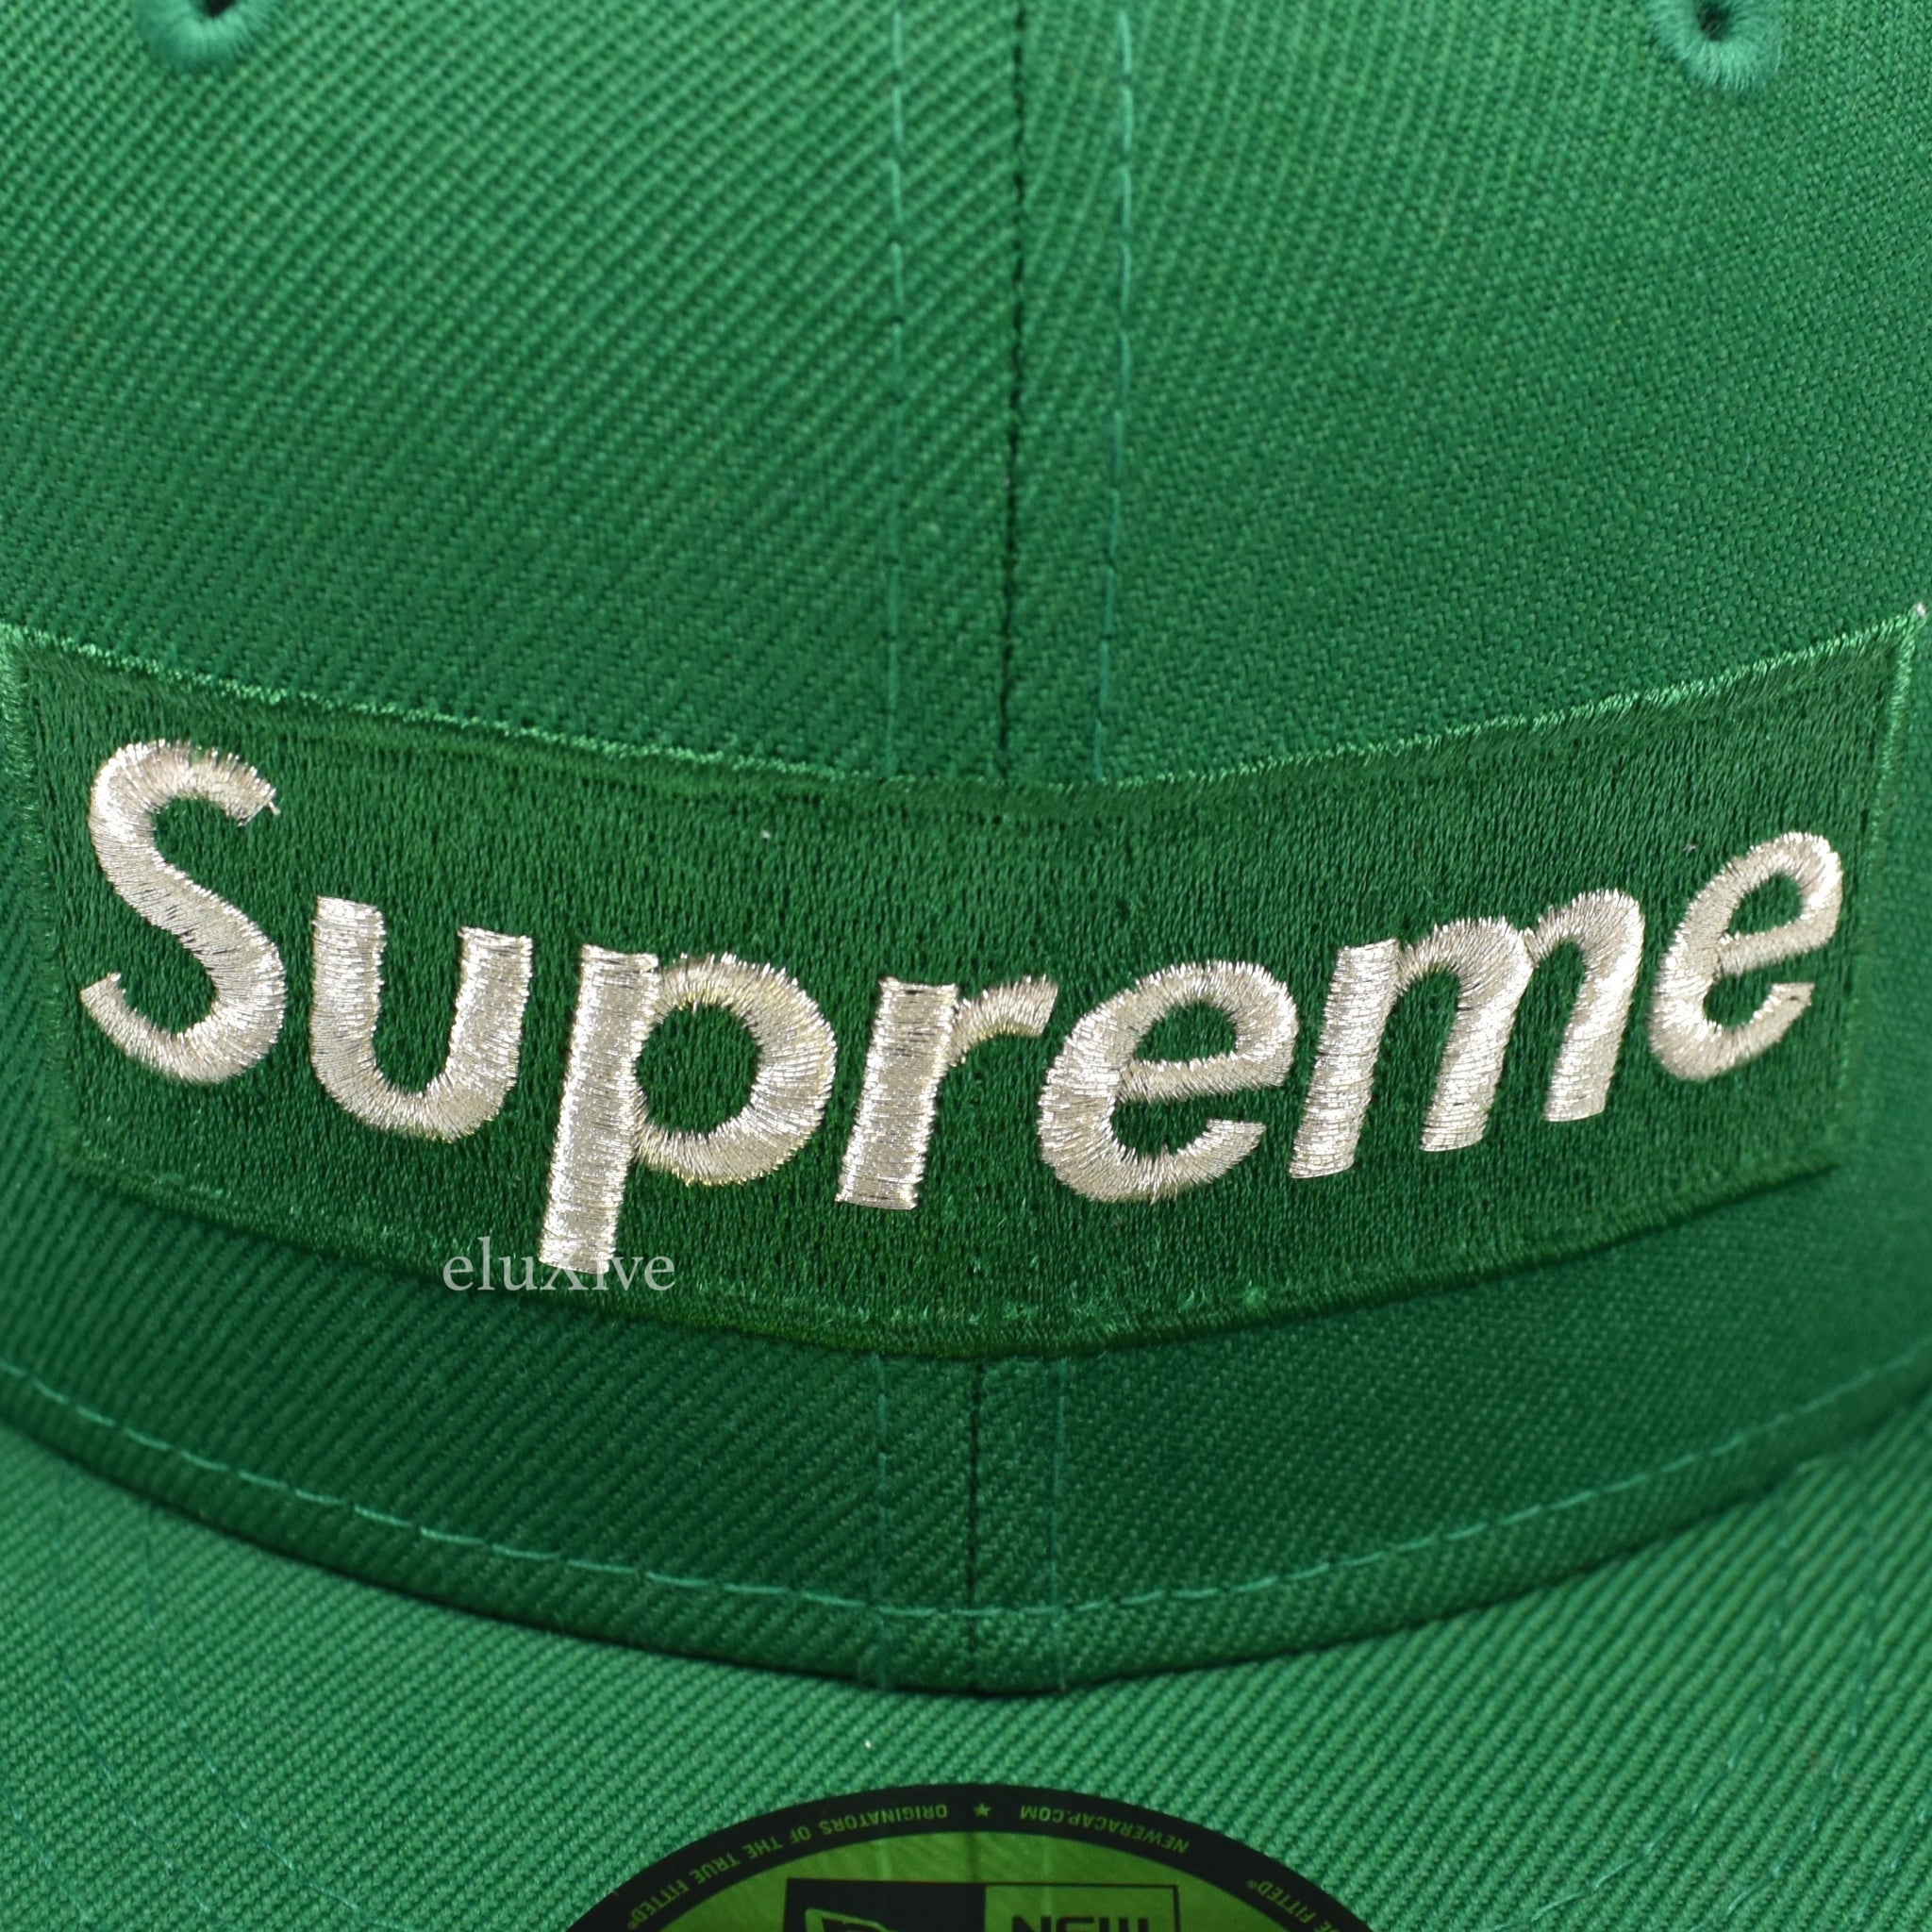 Supreme x New Era - Metallic Box Logo Hat (Green) – eluXive